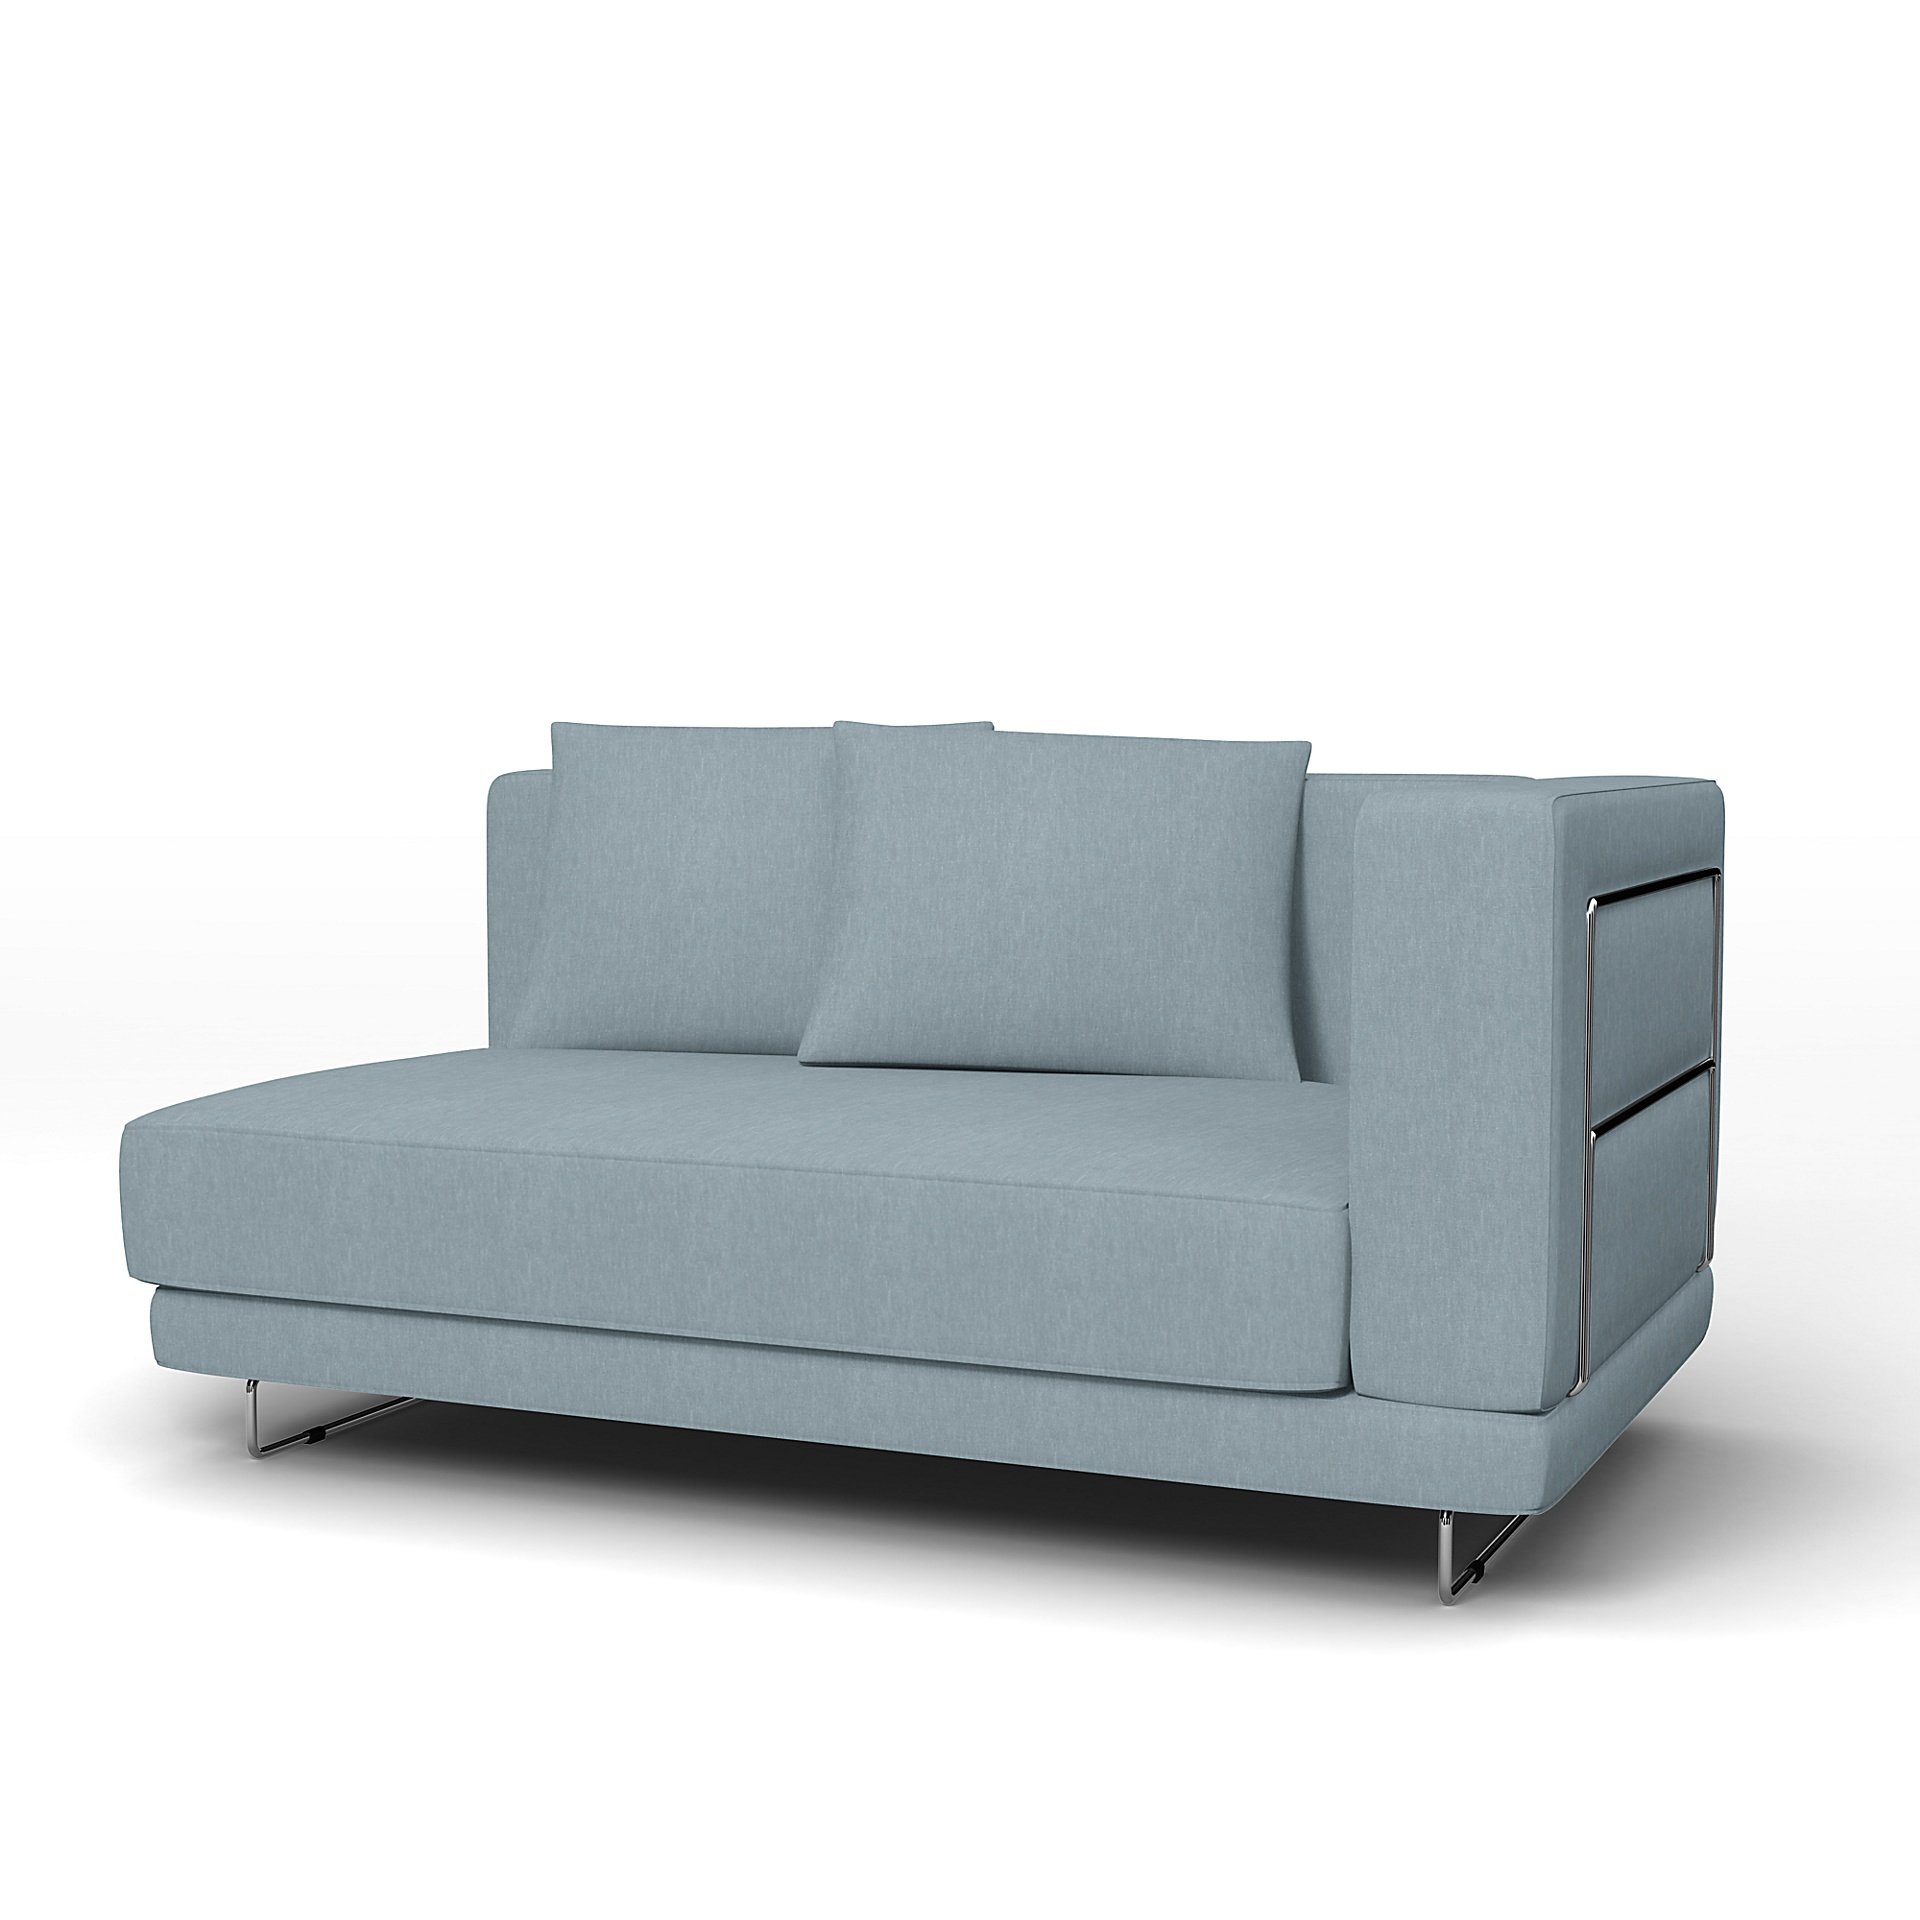 IKEA - Tylosand Sofa with Armrest Cover, Dusty Blue, Linen - Bemz